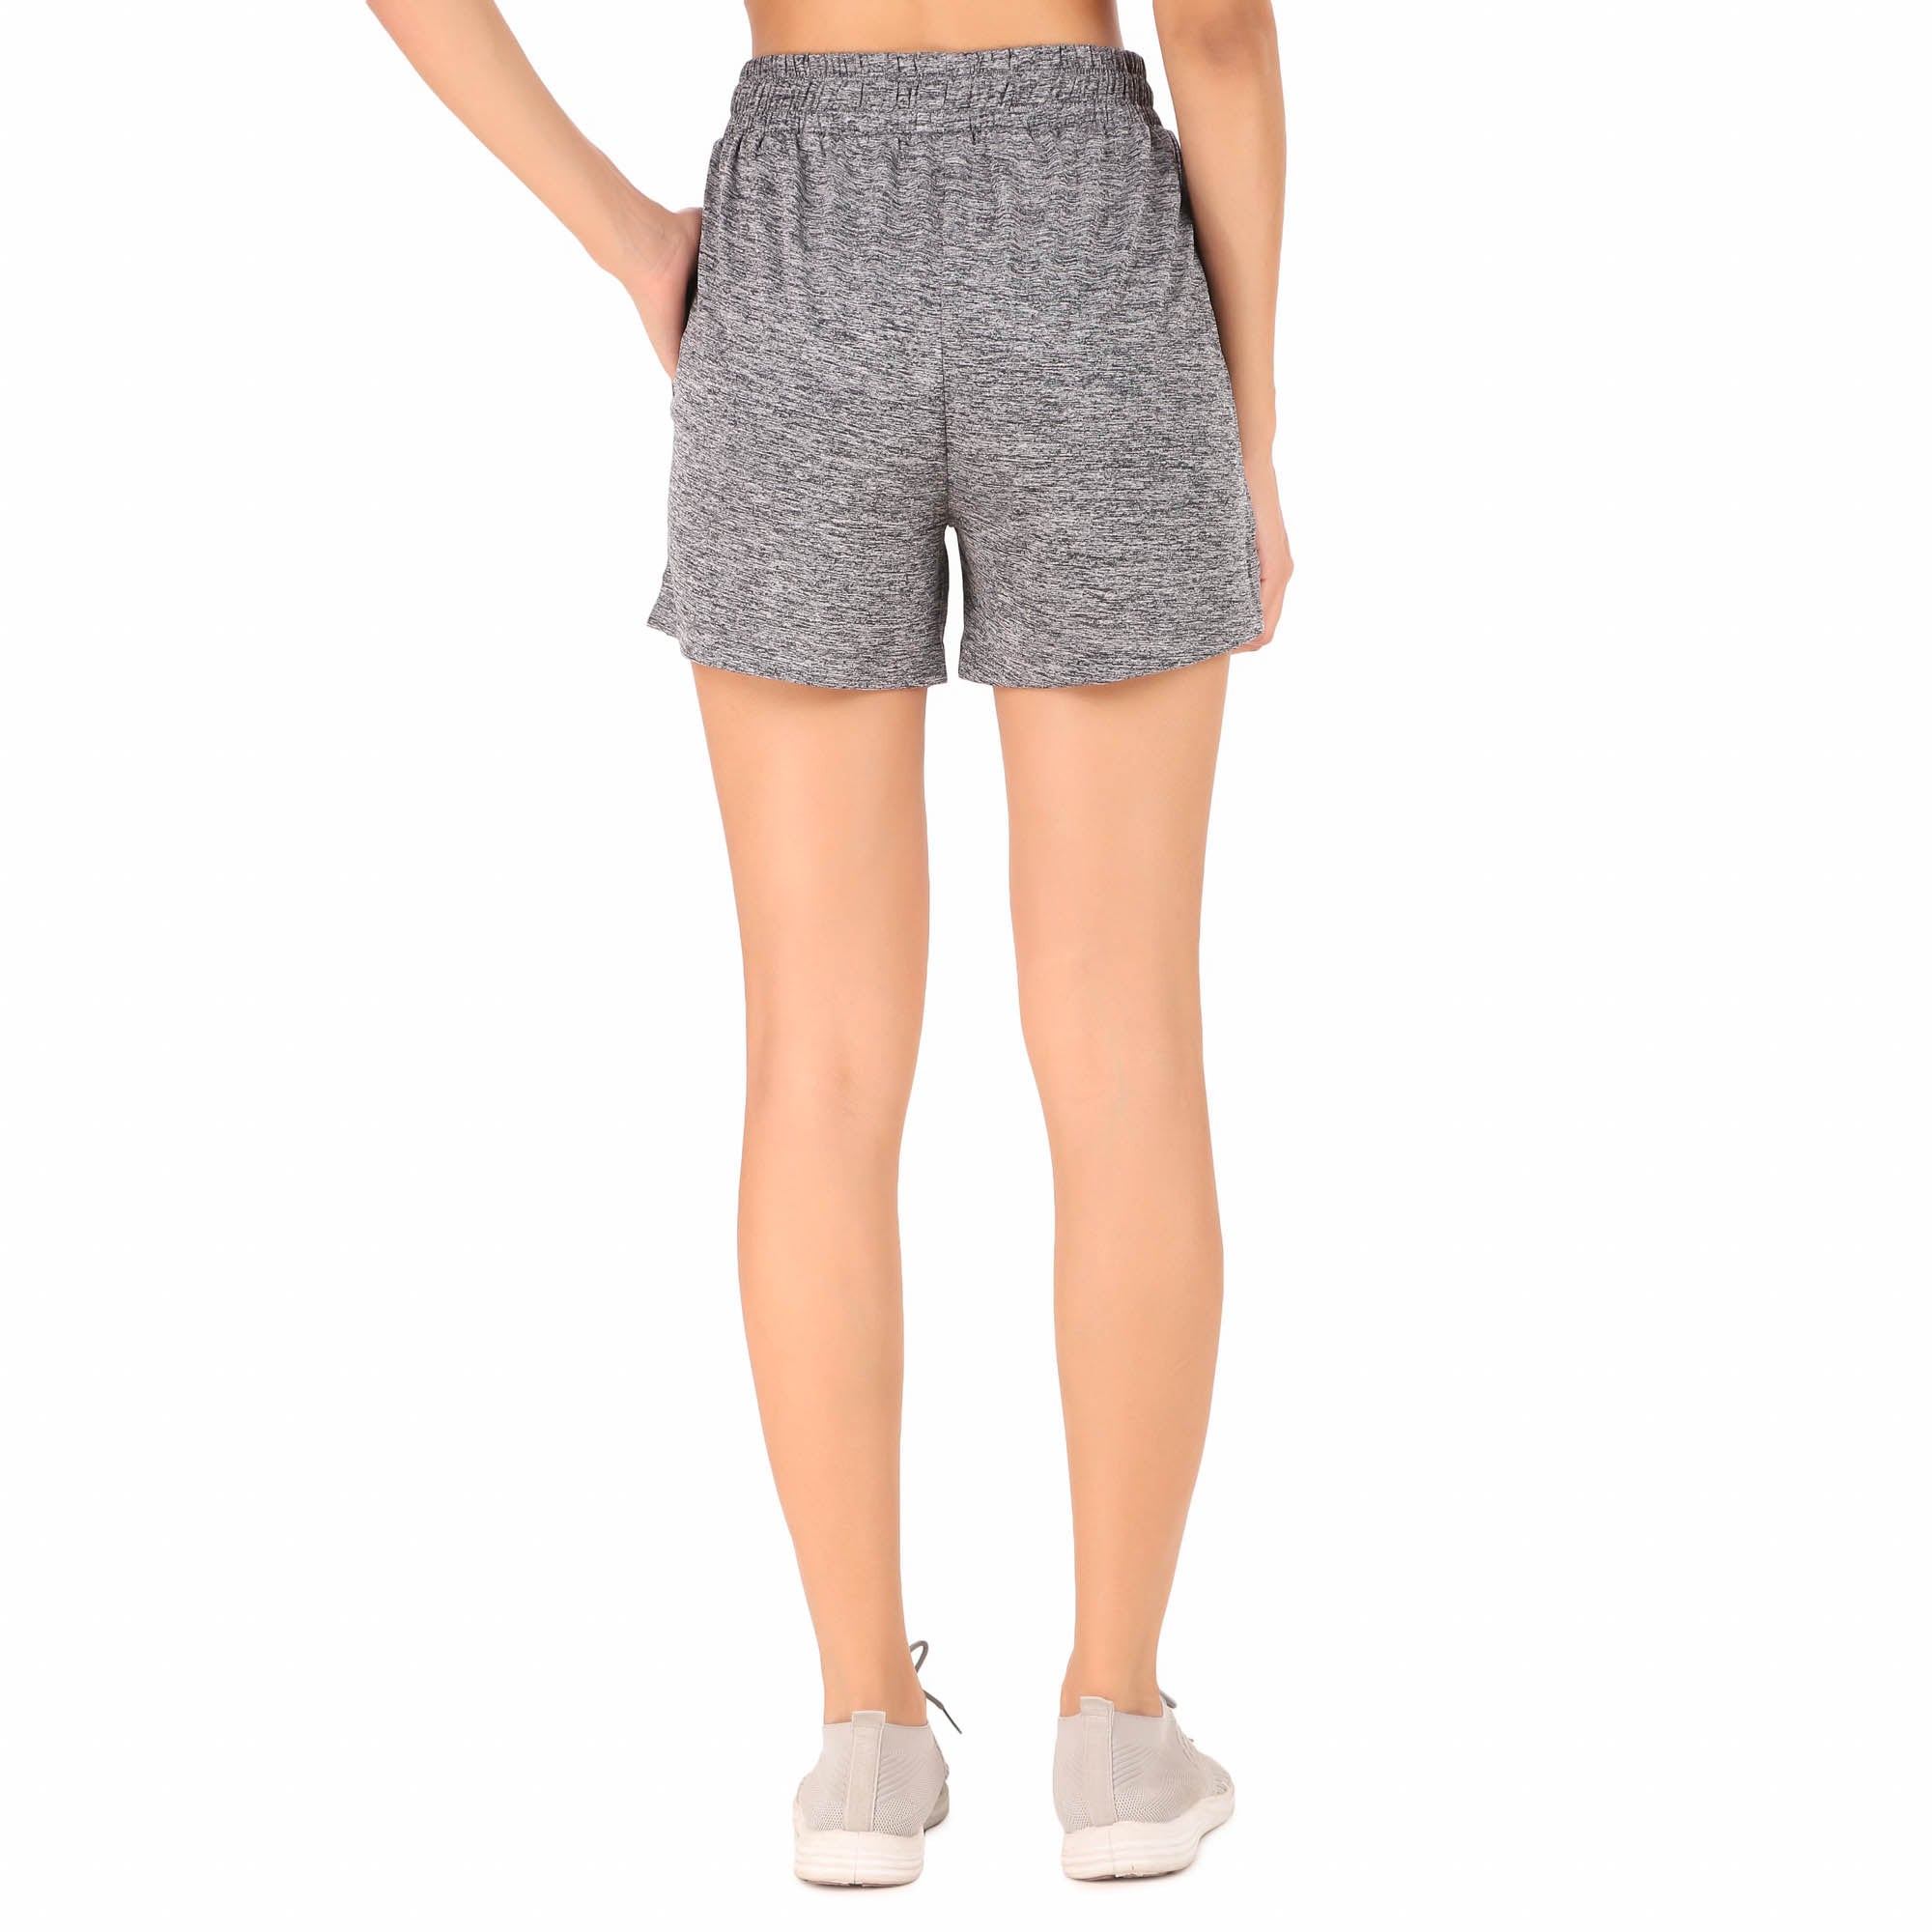 Activewear Shorts For Women (Grey Melange)